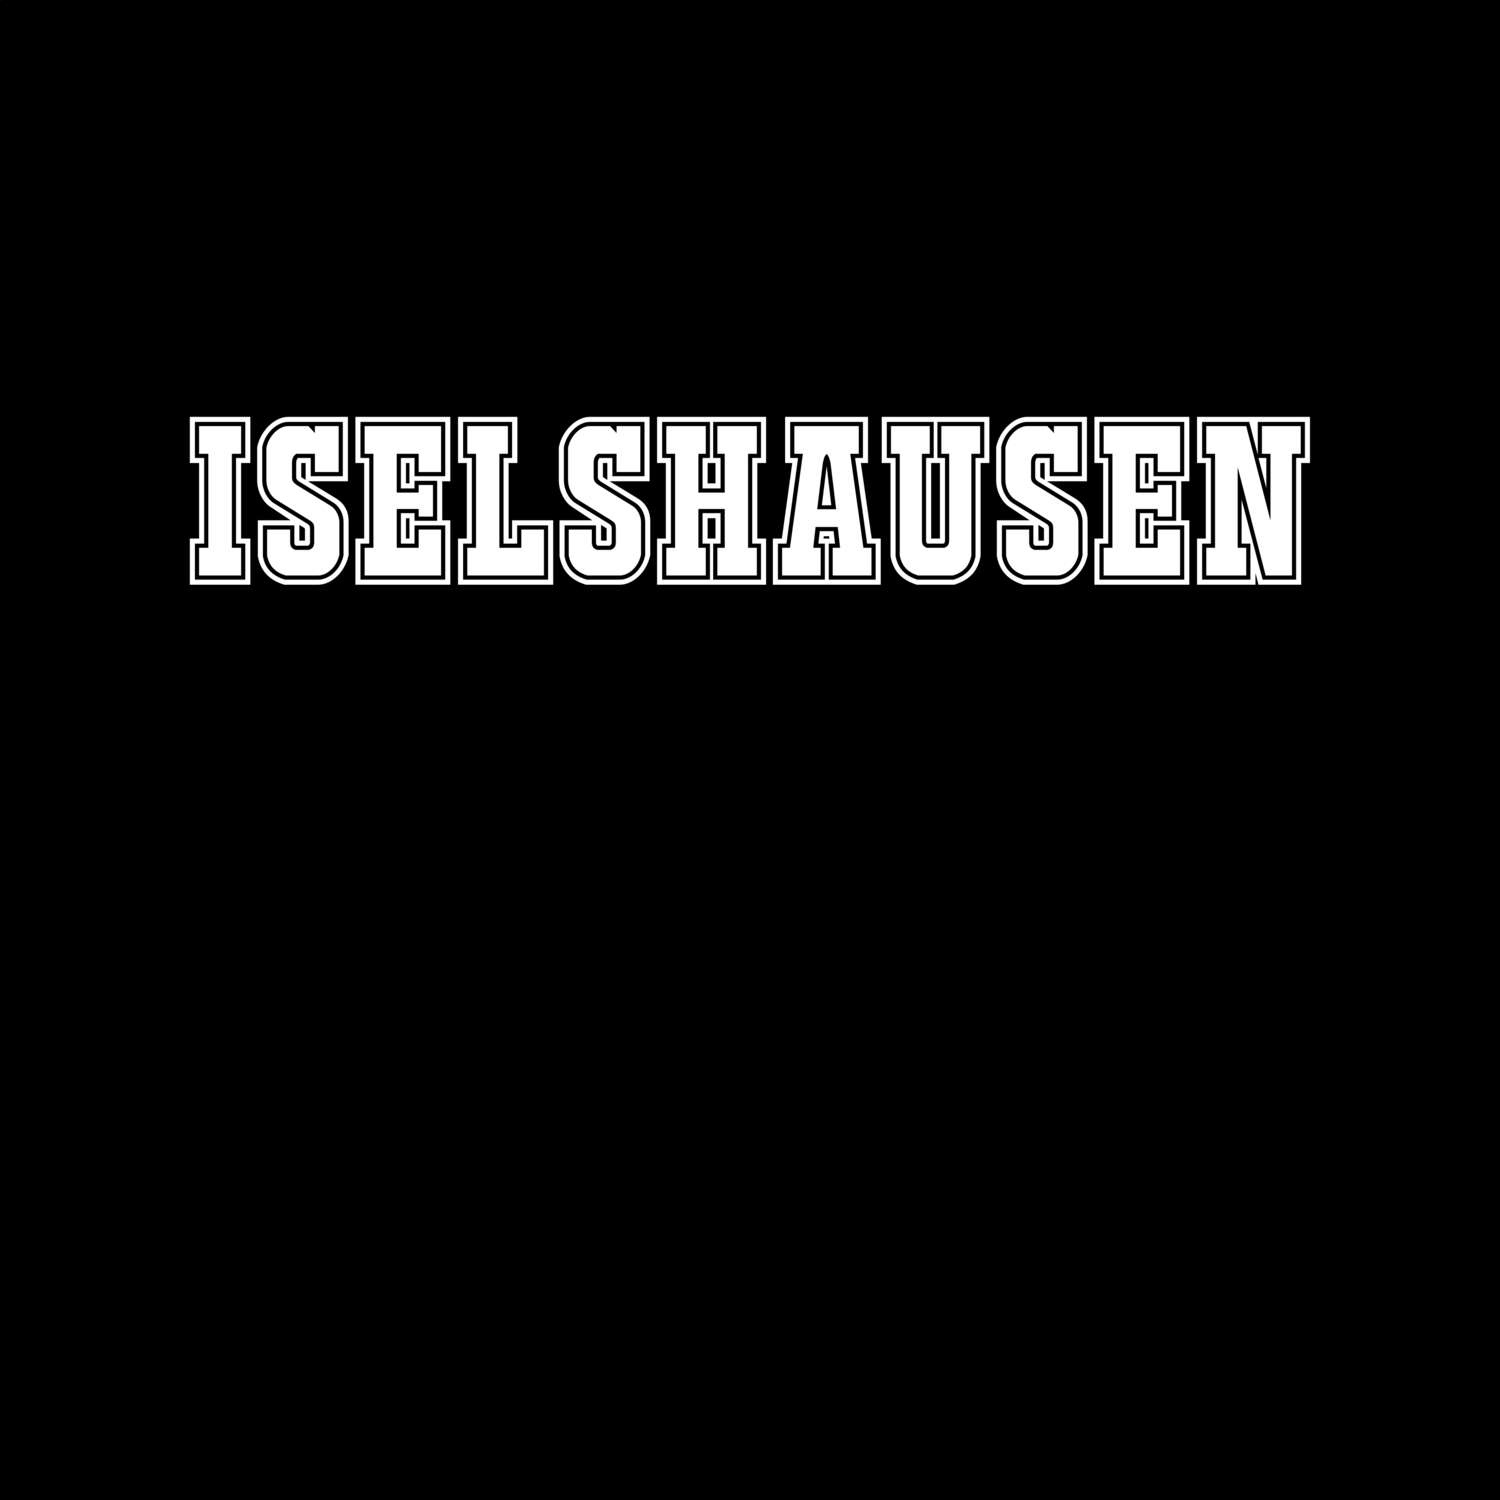 Iselshausen T-Shirt »Classic«